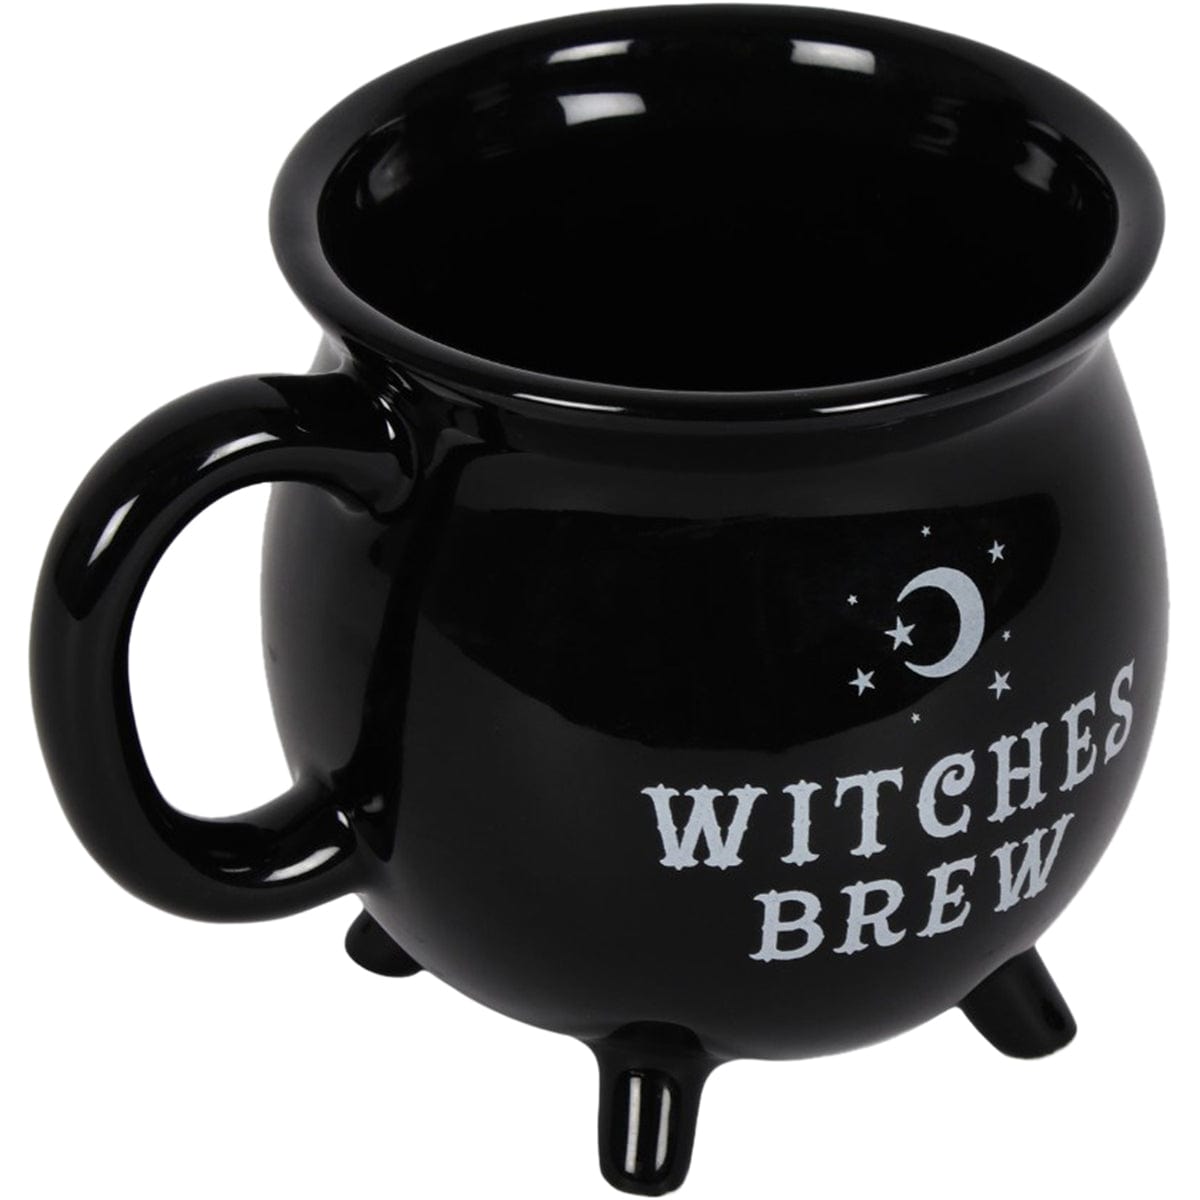 WITCHES BREW MUG - Cauldron Mug - Spiral USA